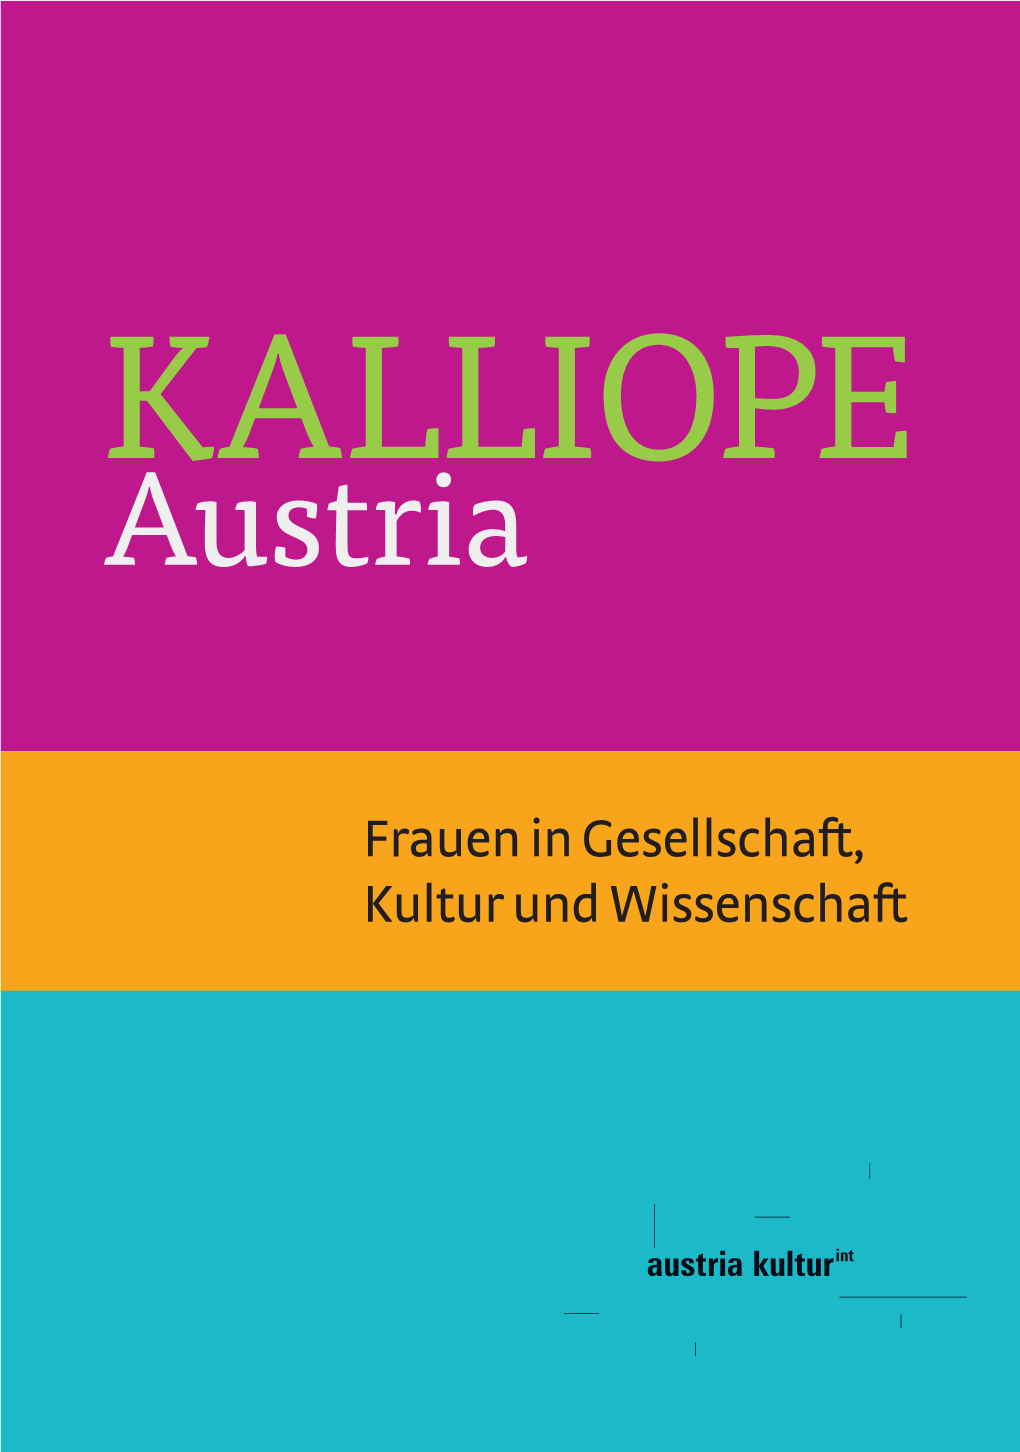 KALLIOPE Austria